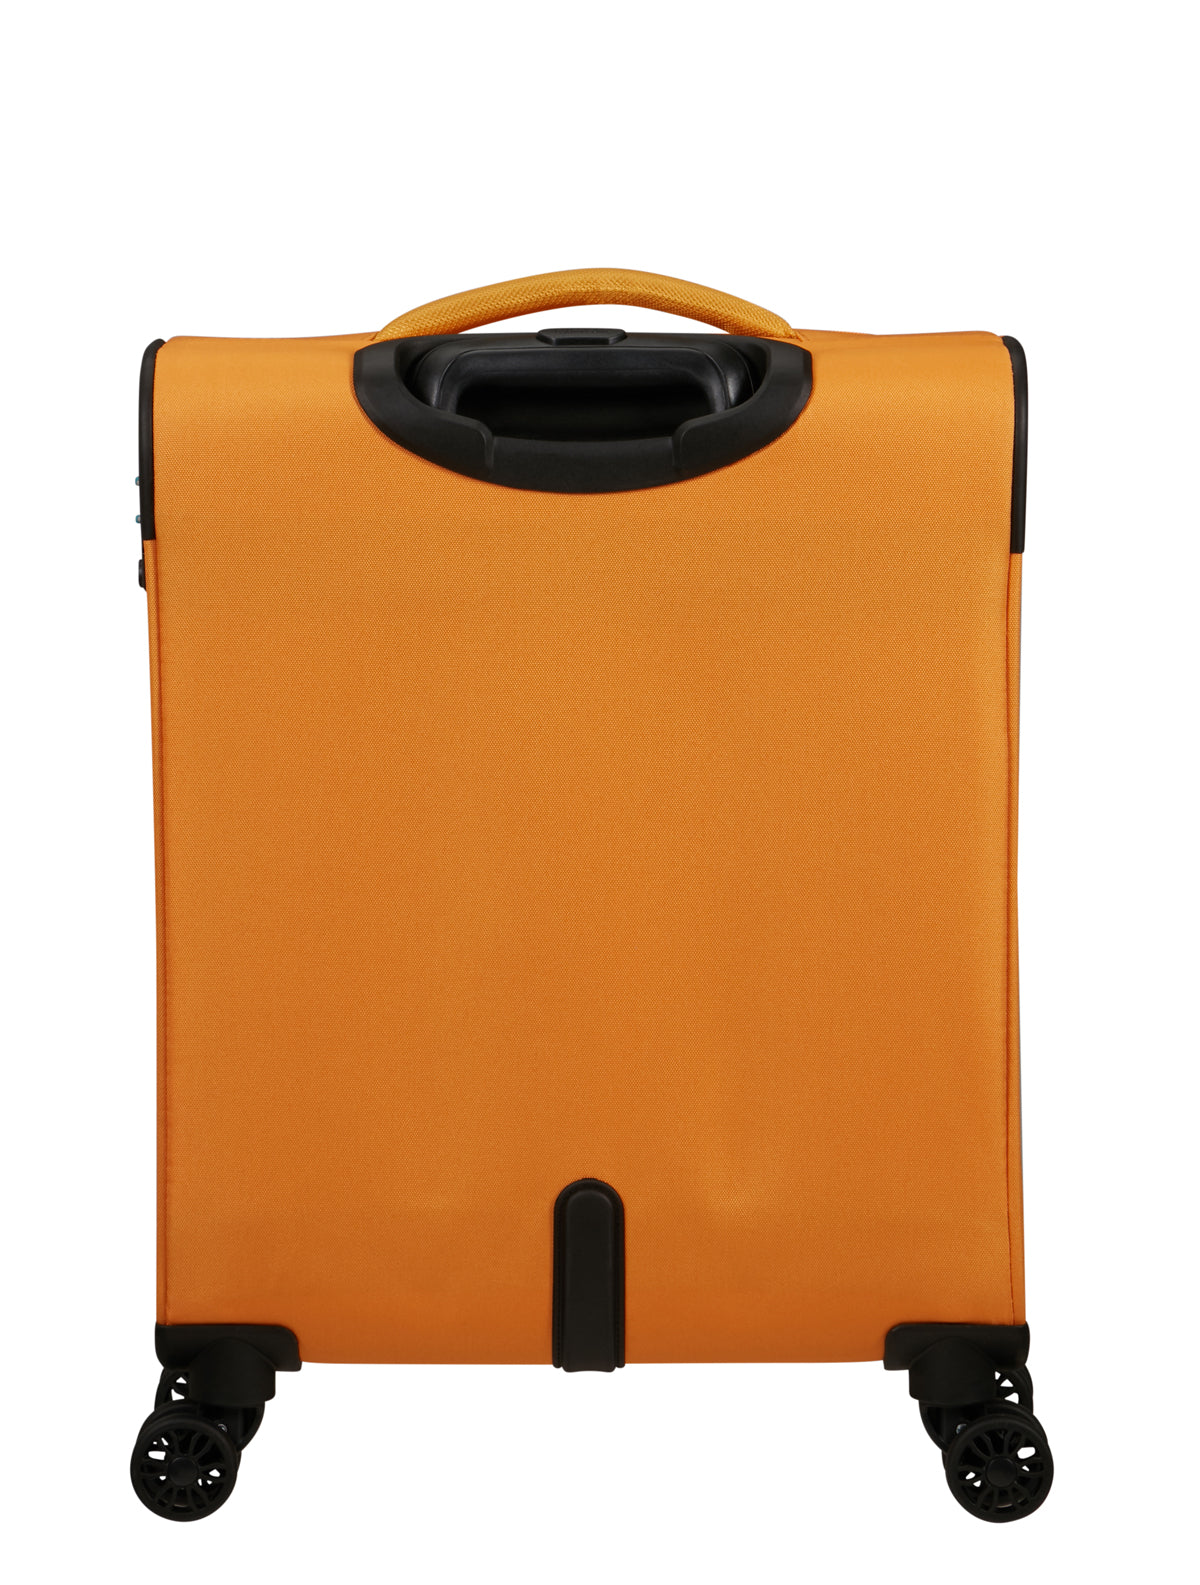 Gele Handbagage koffer 4 wielen H55XB40xD20/23 cm